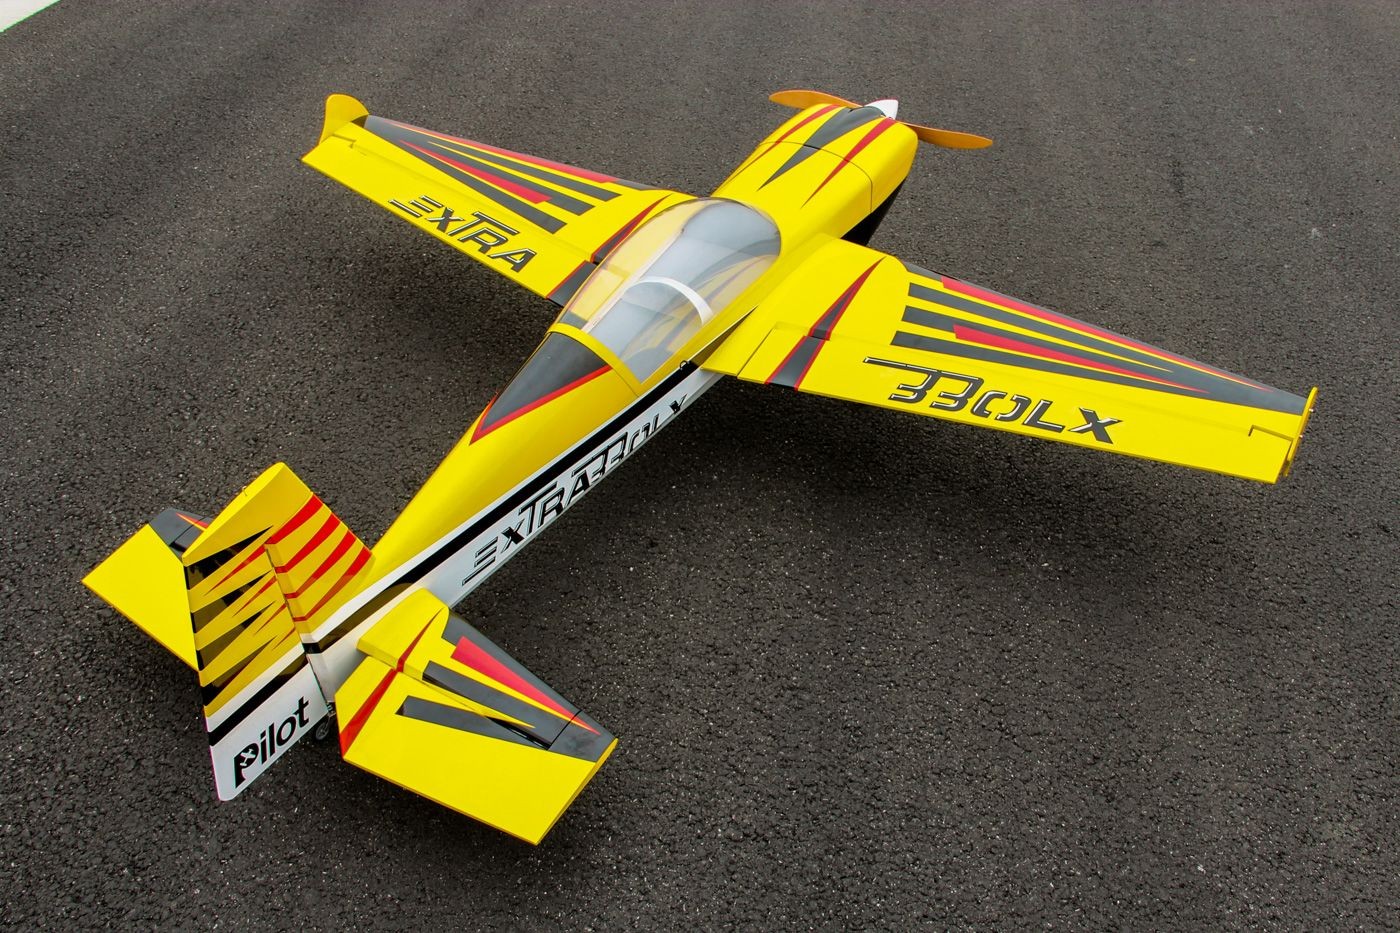 Extra 330 LX Pilot RC